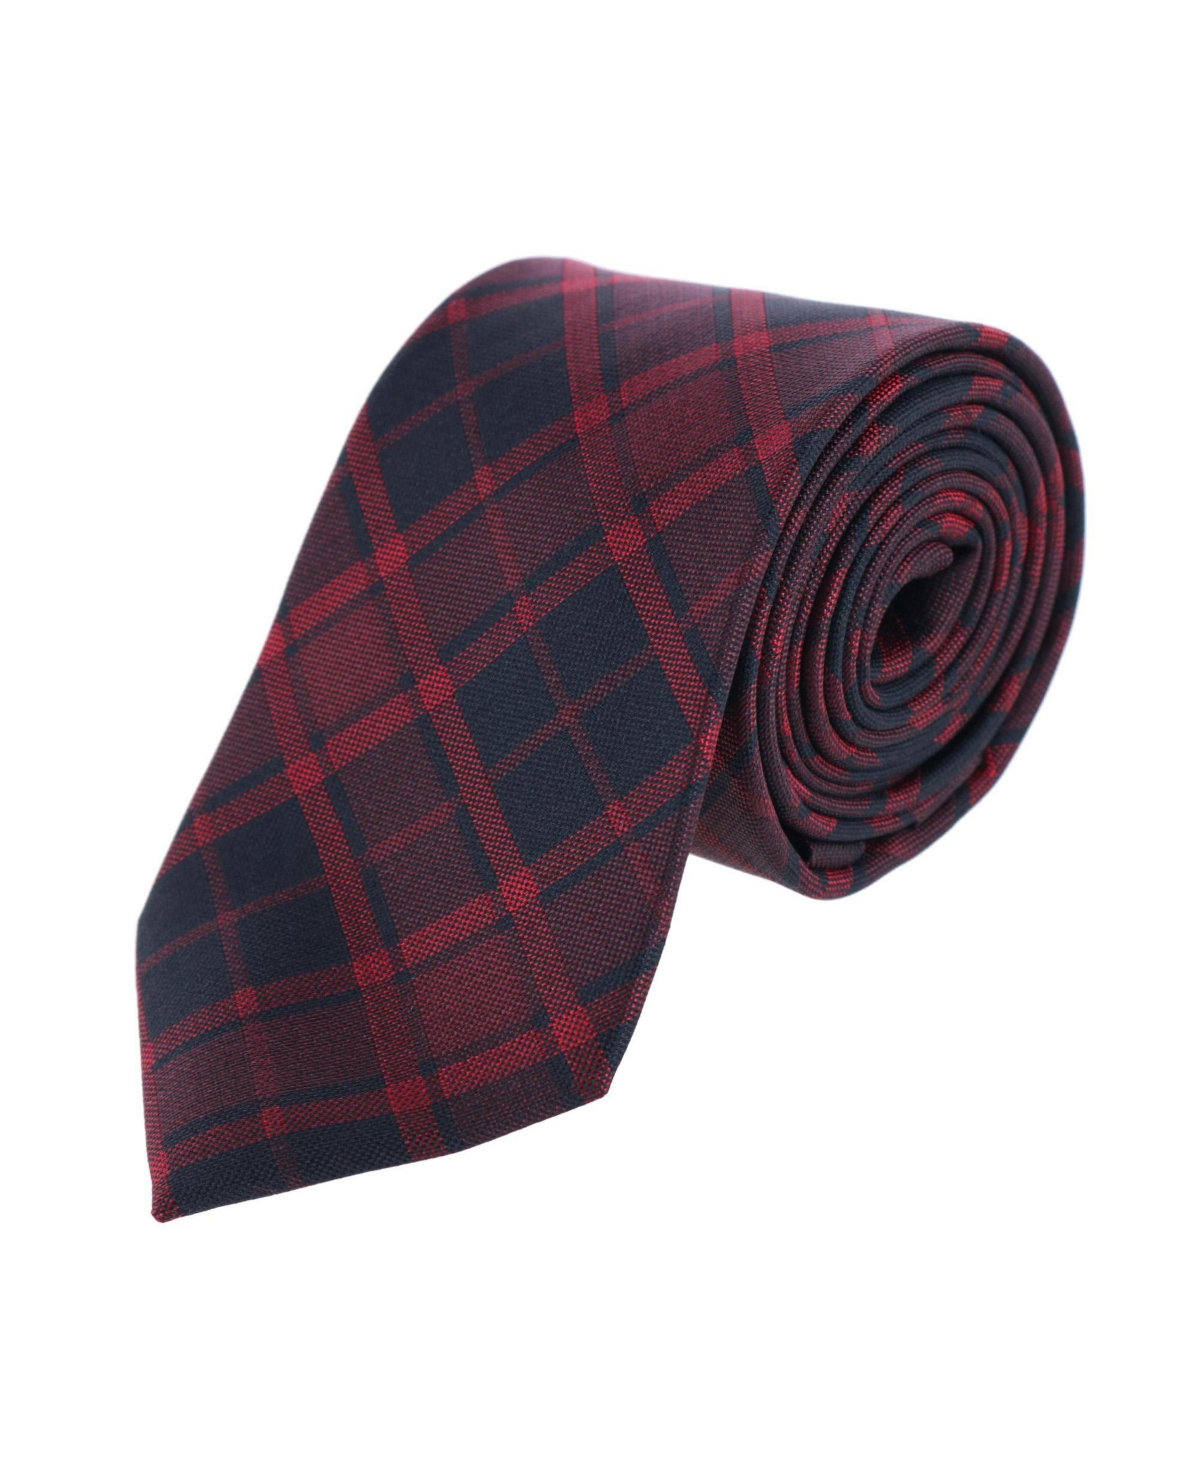 Men's Kincade Red Blackwatch Plaid Silk Necktie - Red plaid